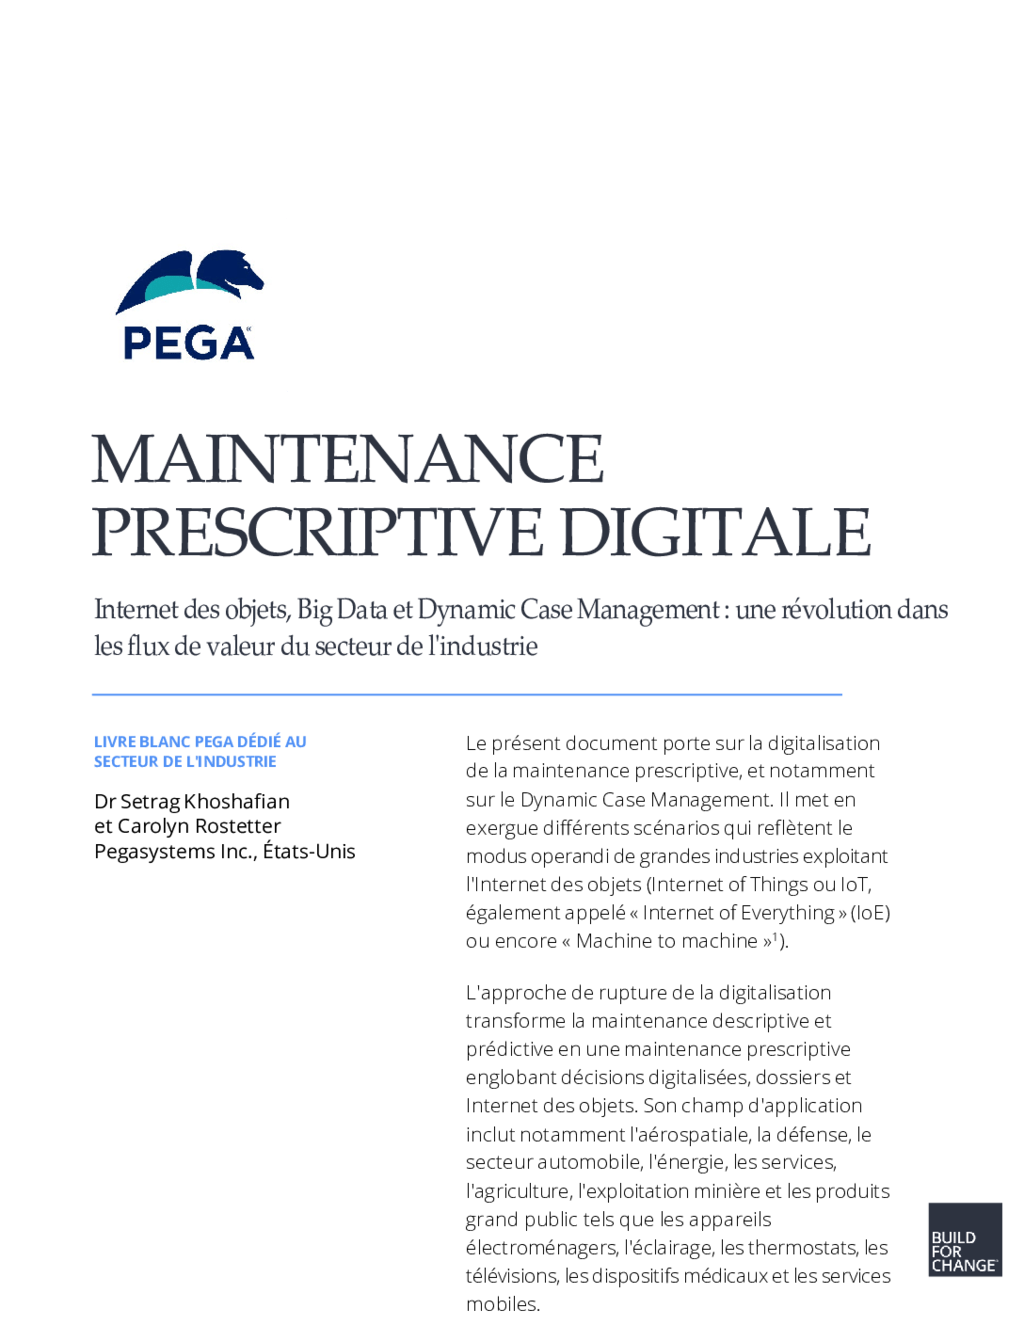 Maintenance prescriptive digitale